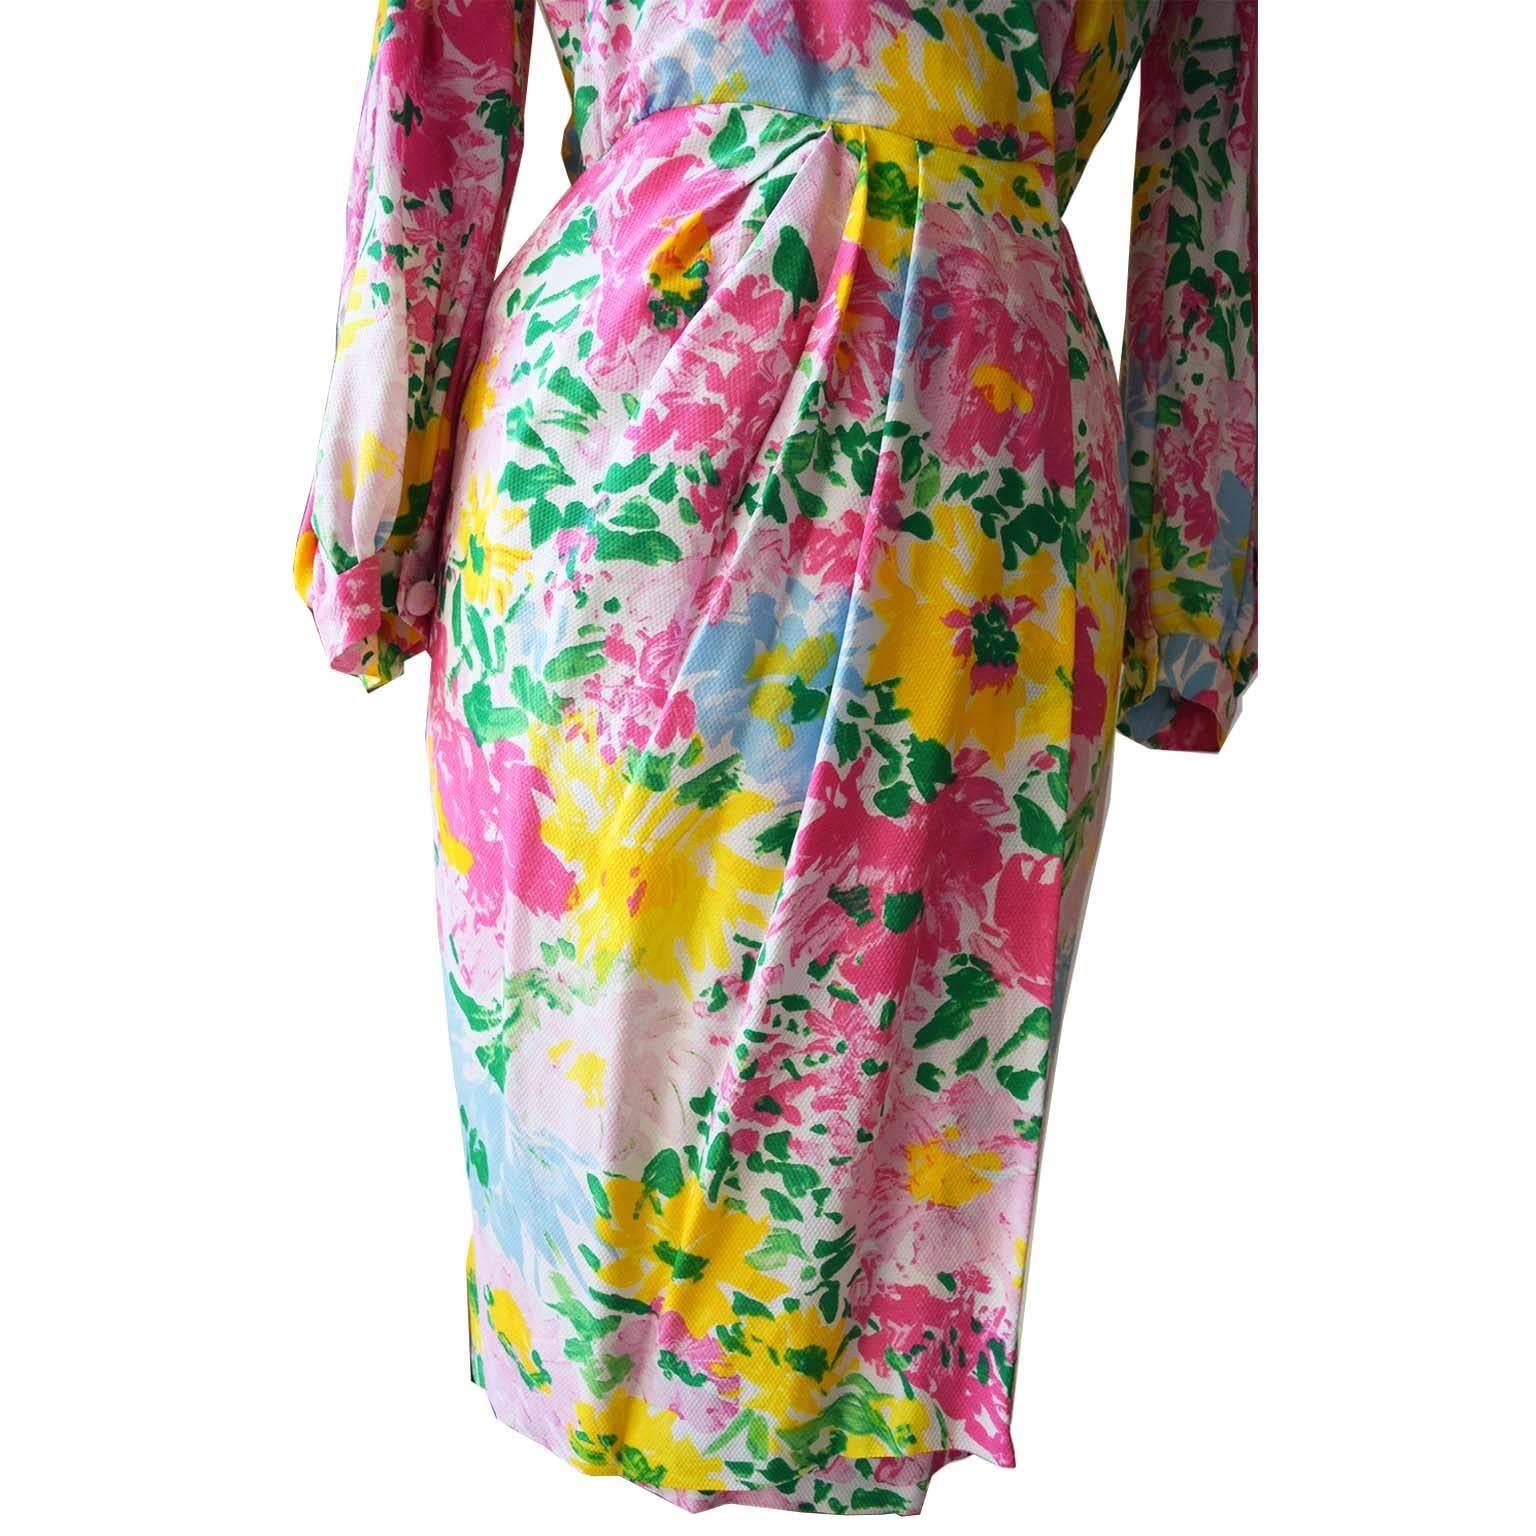 Christian Dior pret-a-porter size S US 4 floral print vintage wrap dress For Sale 5